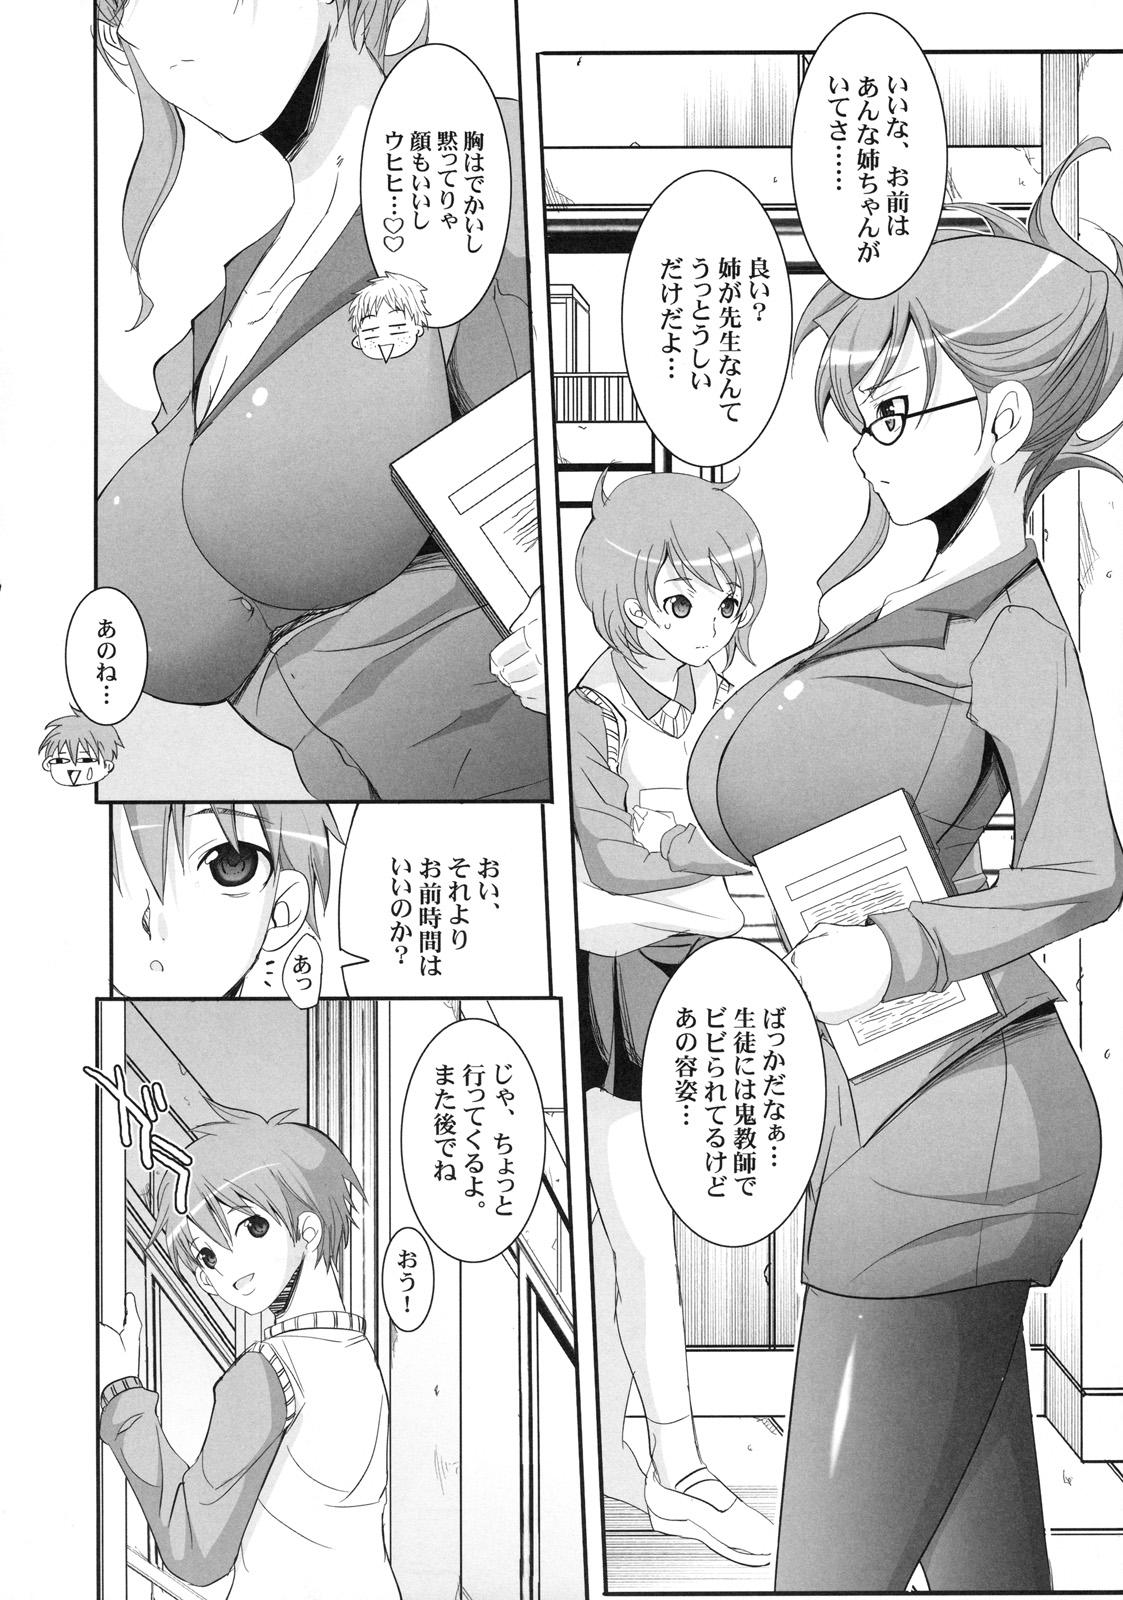 Shinzui Valentine Special Vol. 1 64